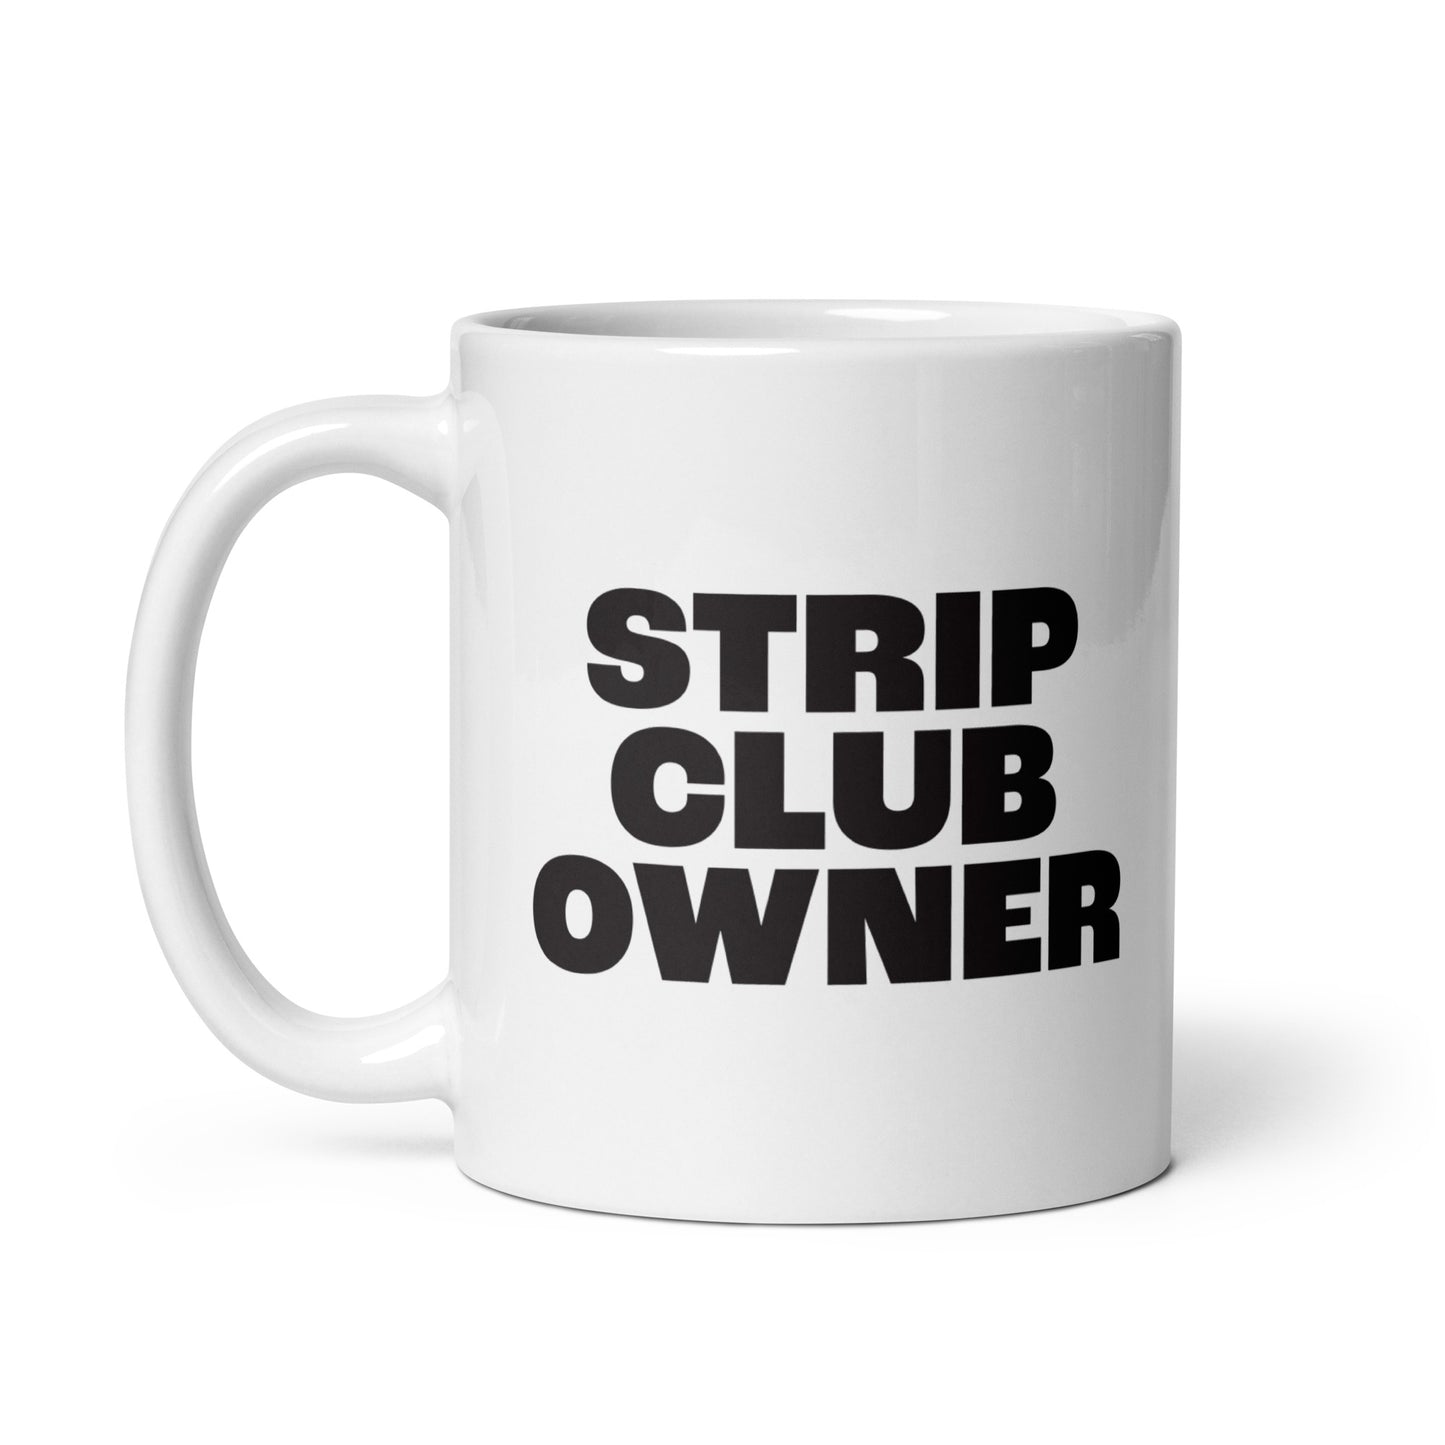 Strip Club Owner Mug - White